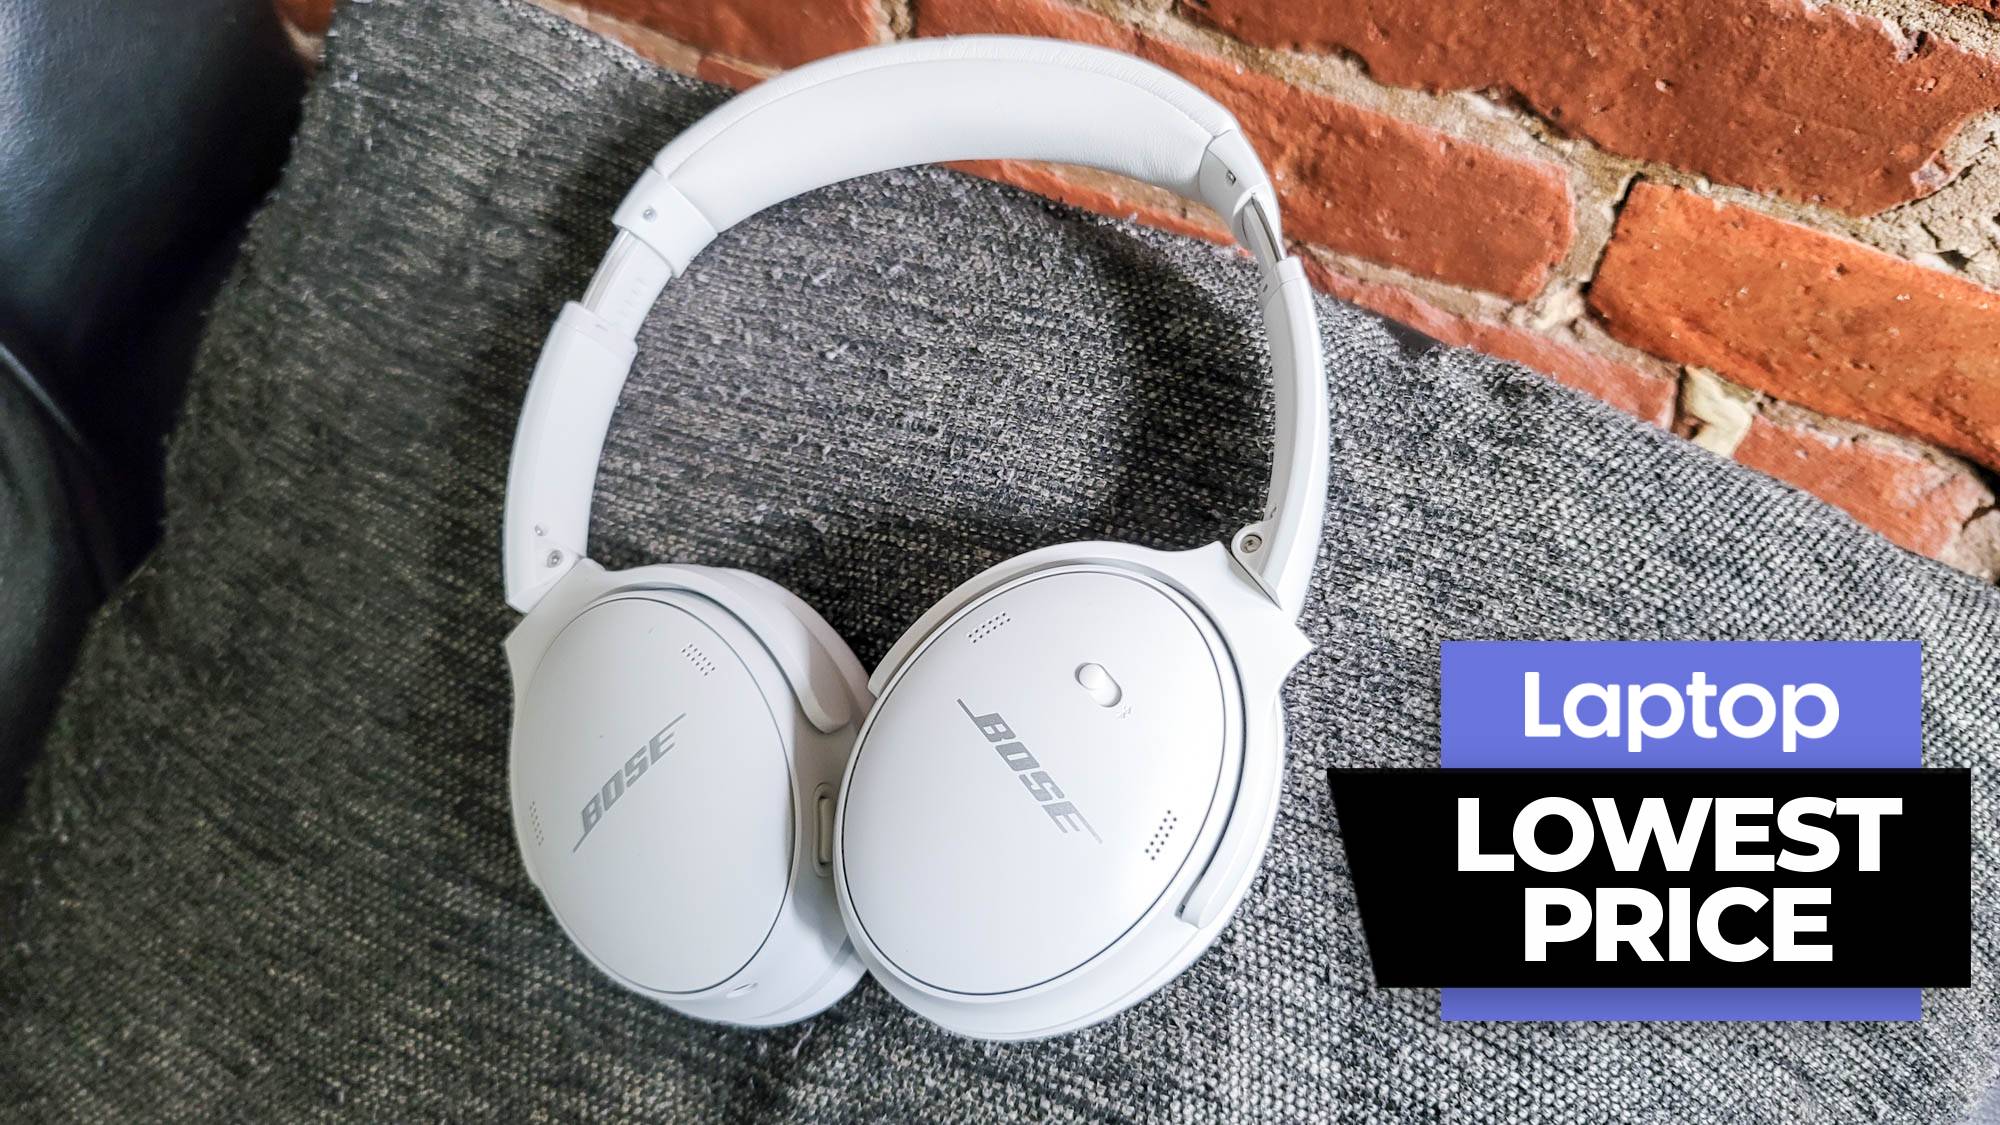 Bose's ultra-comfy QuietComfort 45 headphones are $80 off today